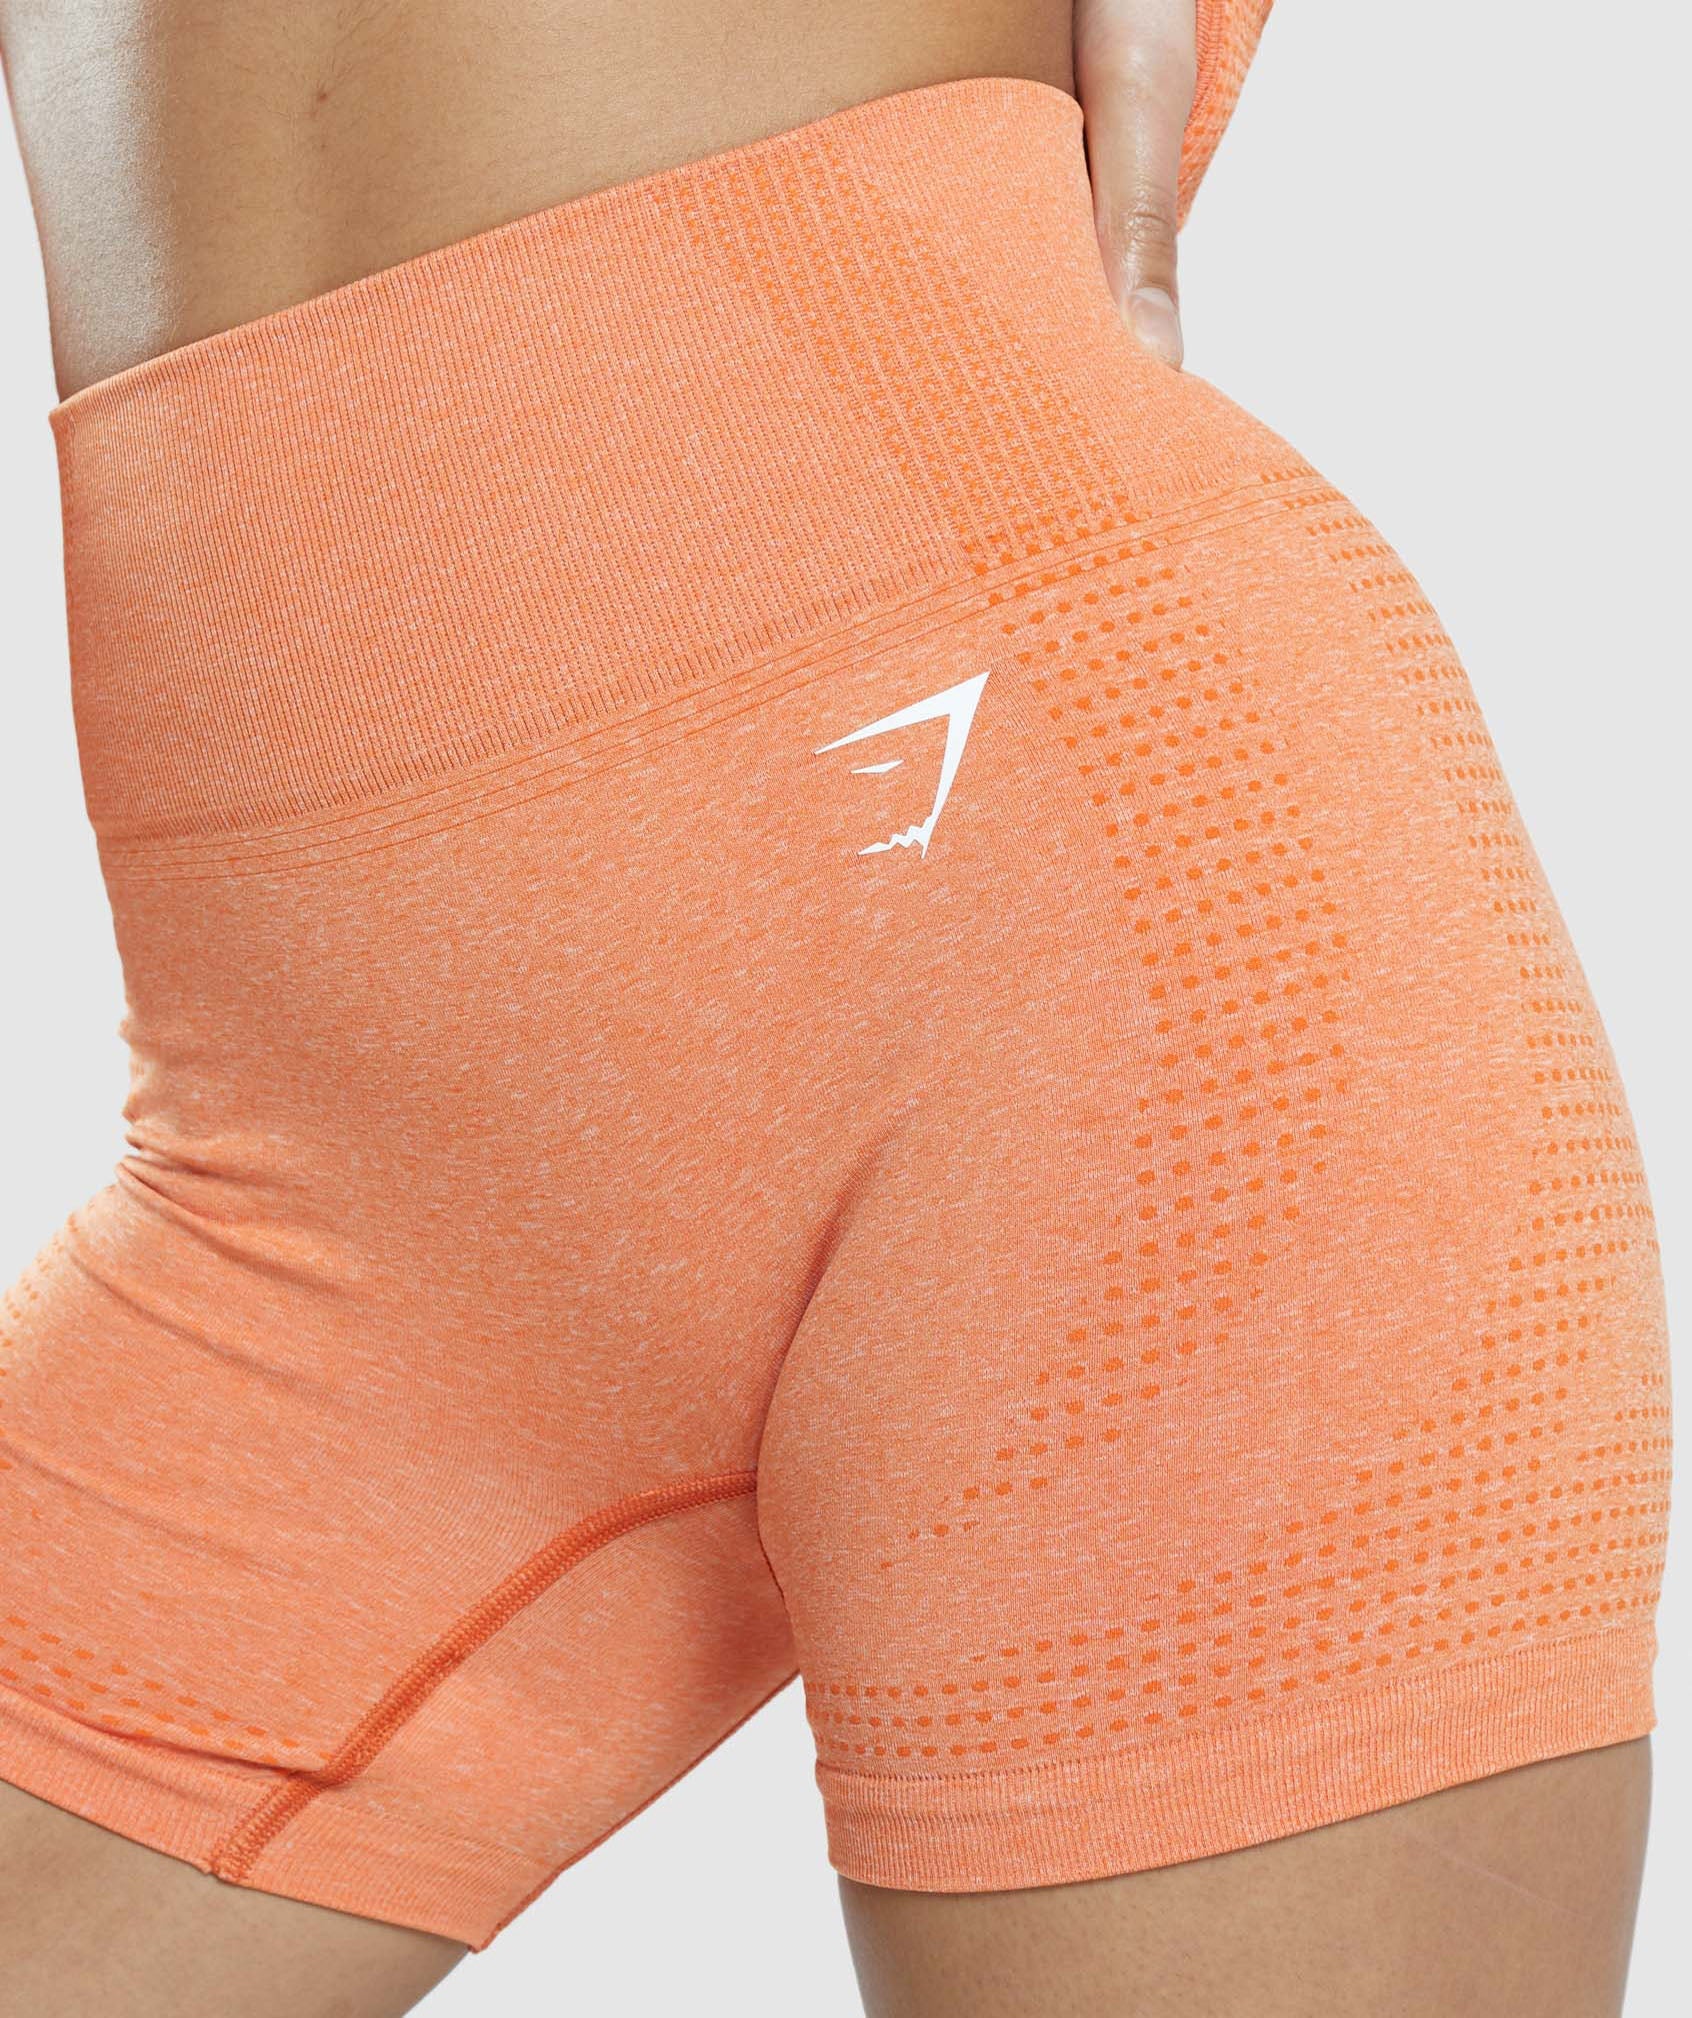 Vital Seamless 2.0 Shorts in Apricot Orange Marl